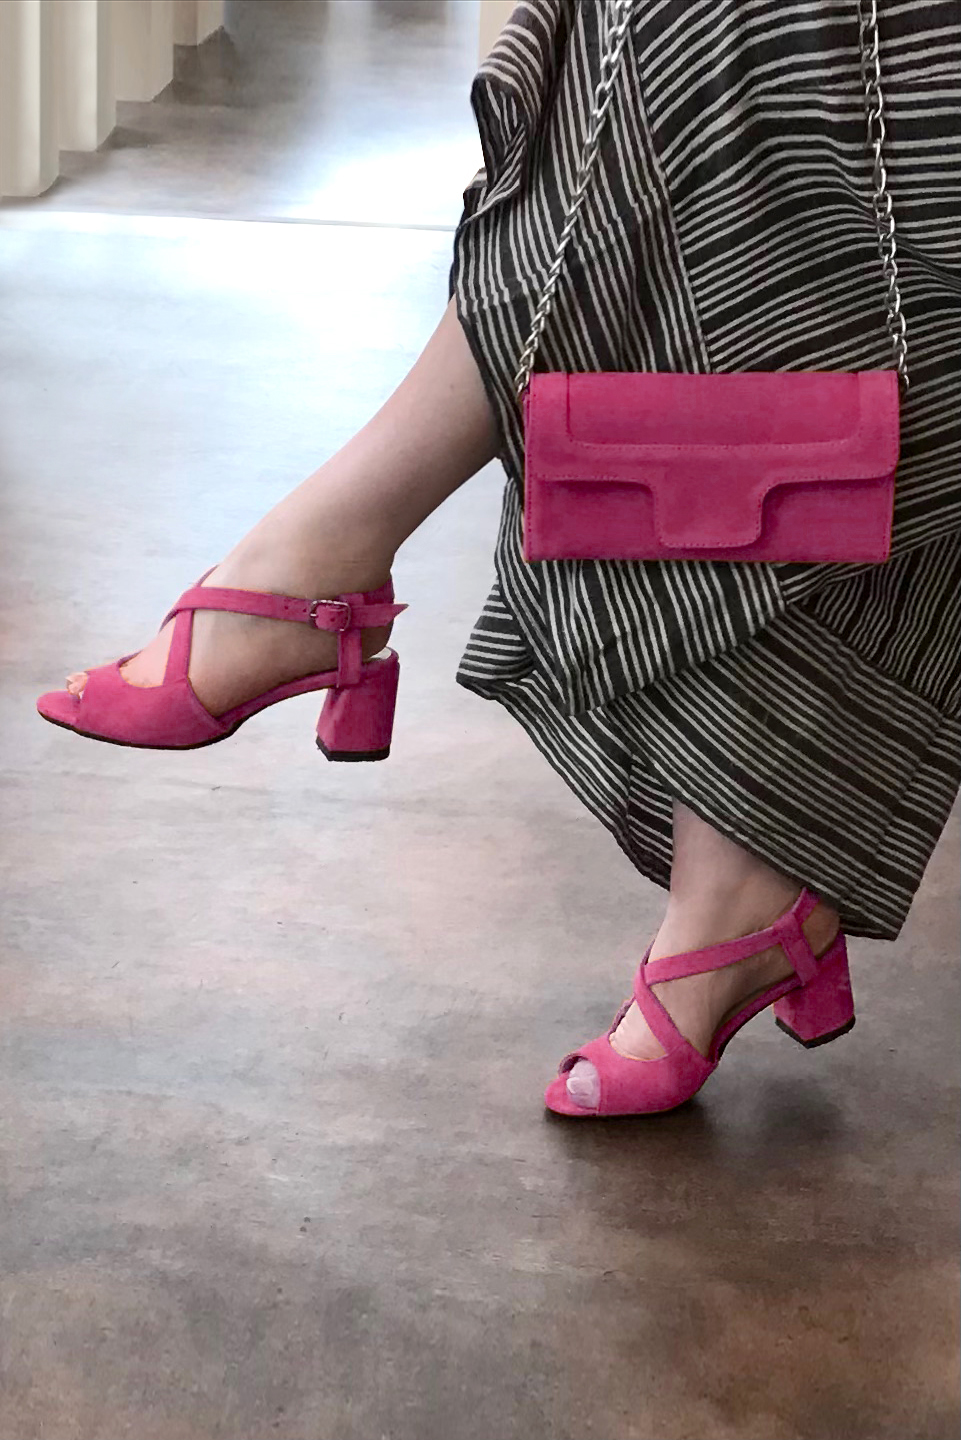 Sandales et pochette assorties couleur rose fuchsia - Florence KOOIJMAN